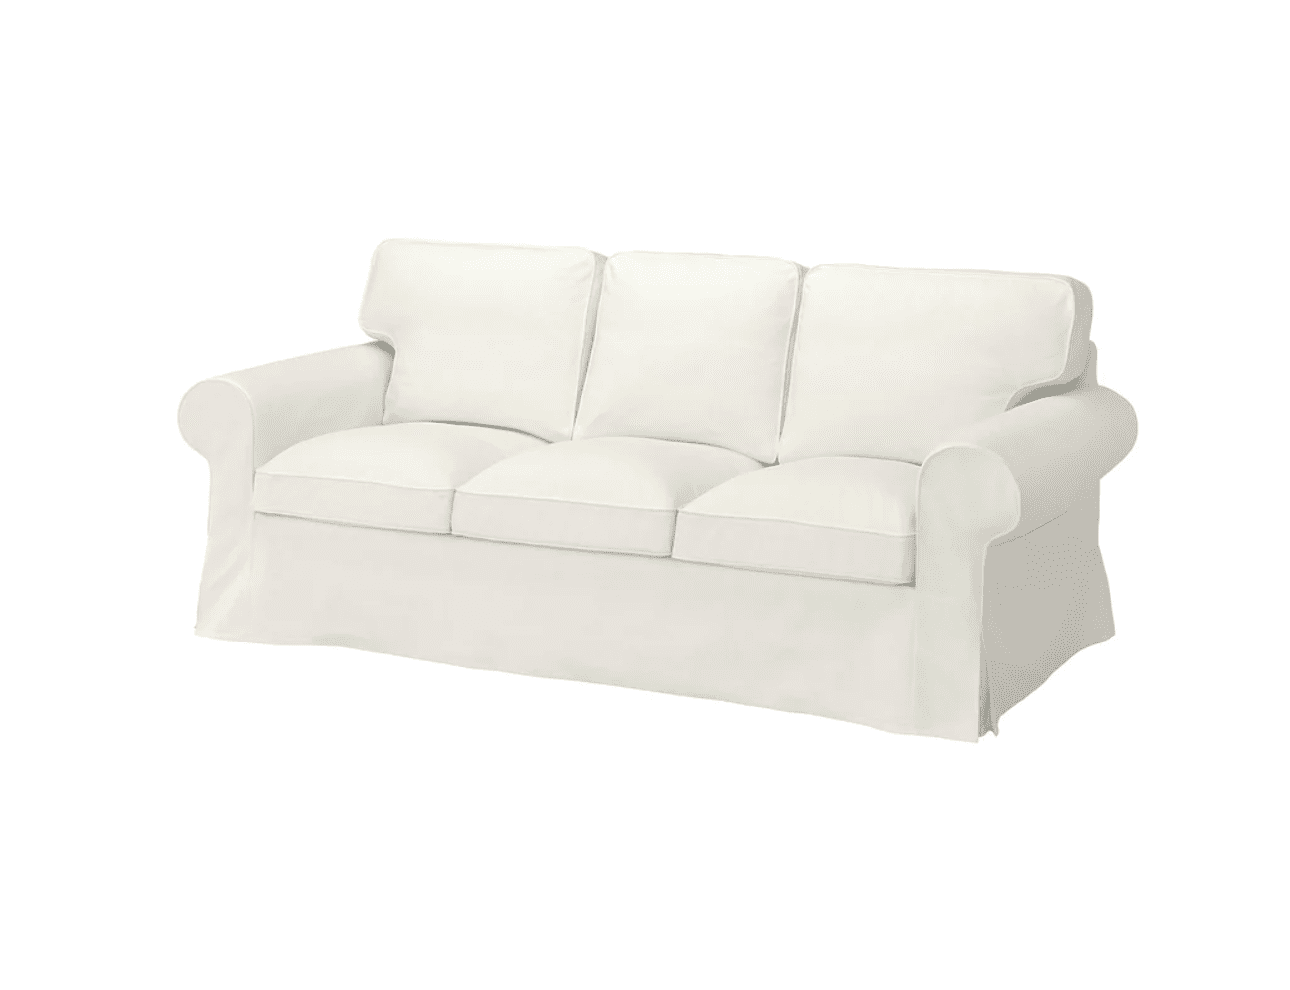 White IKEA Lawson Sofa